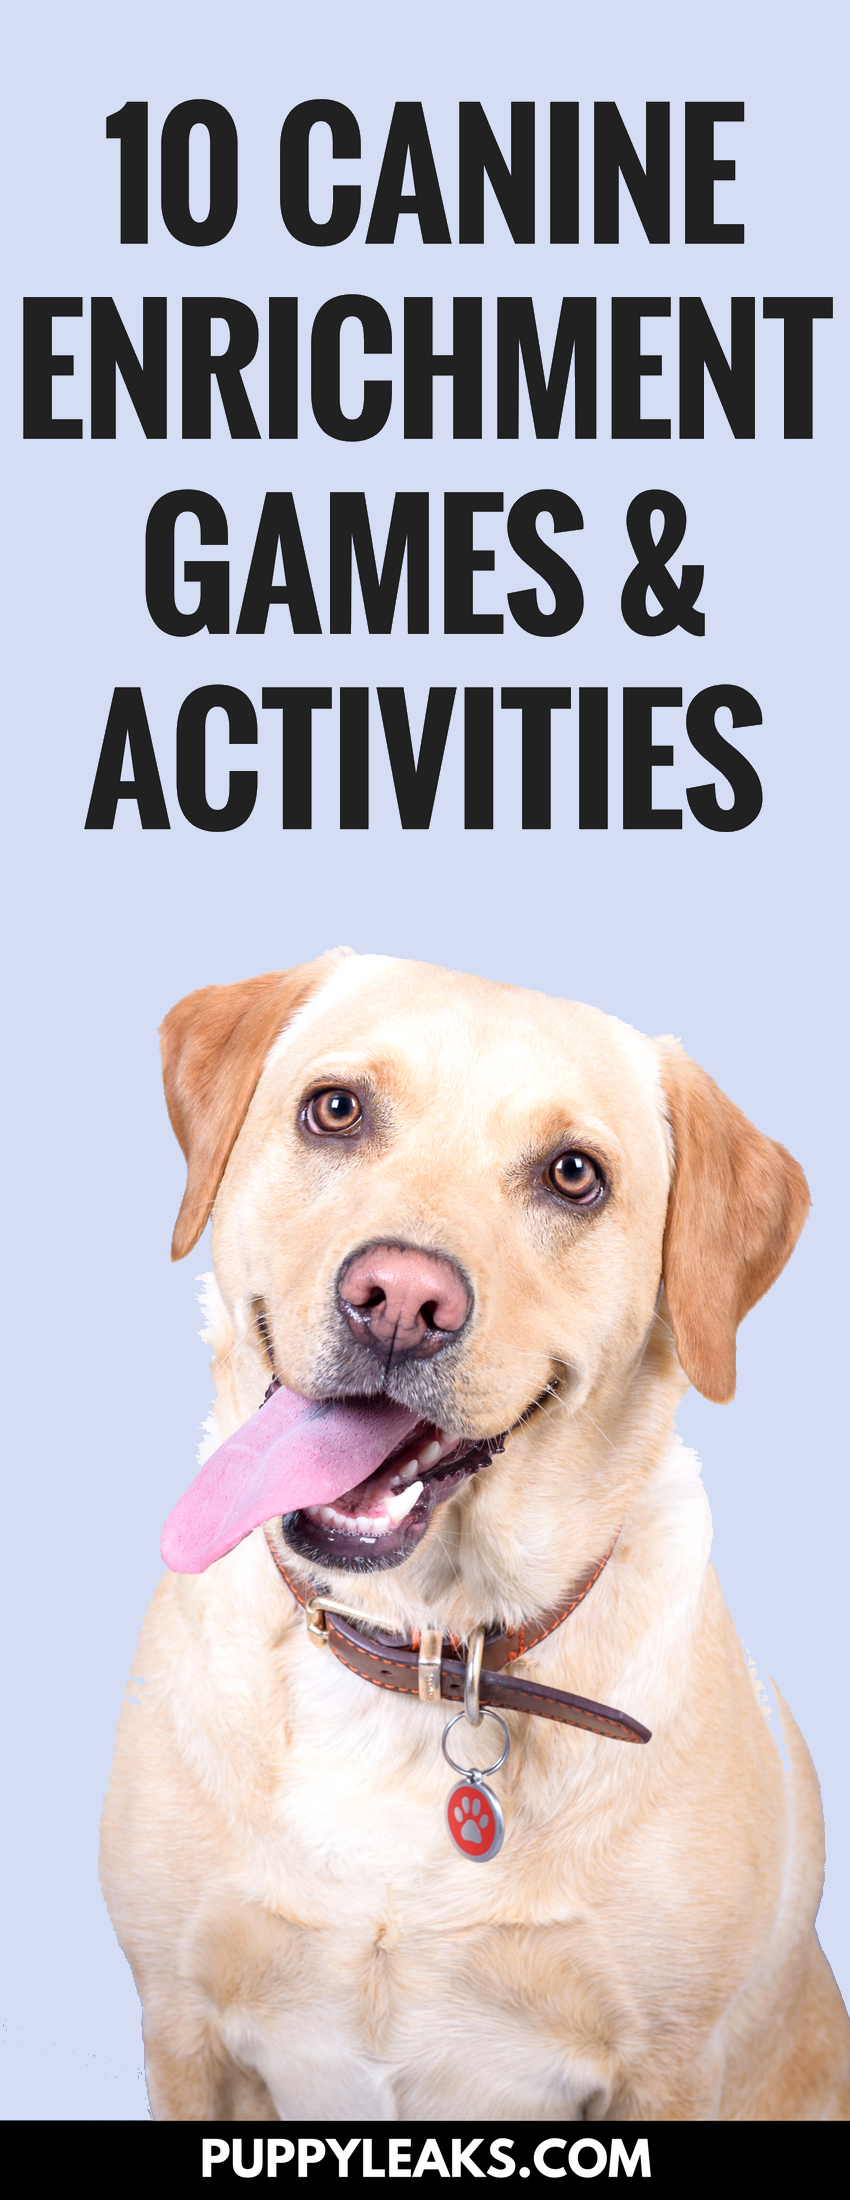 10 Canine Enrichment Games & Activities